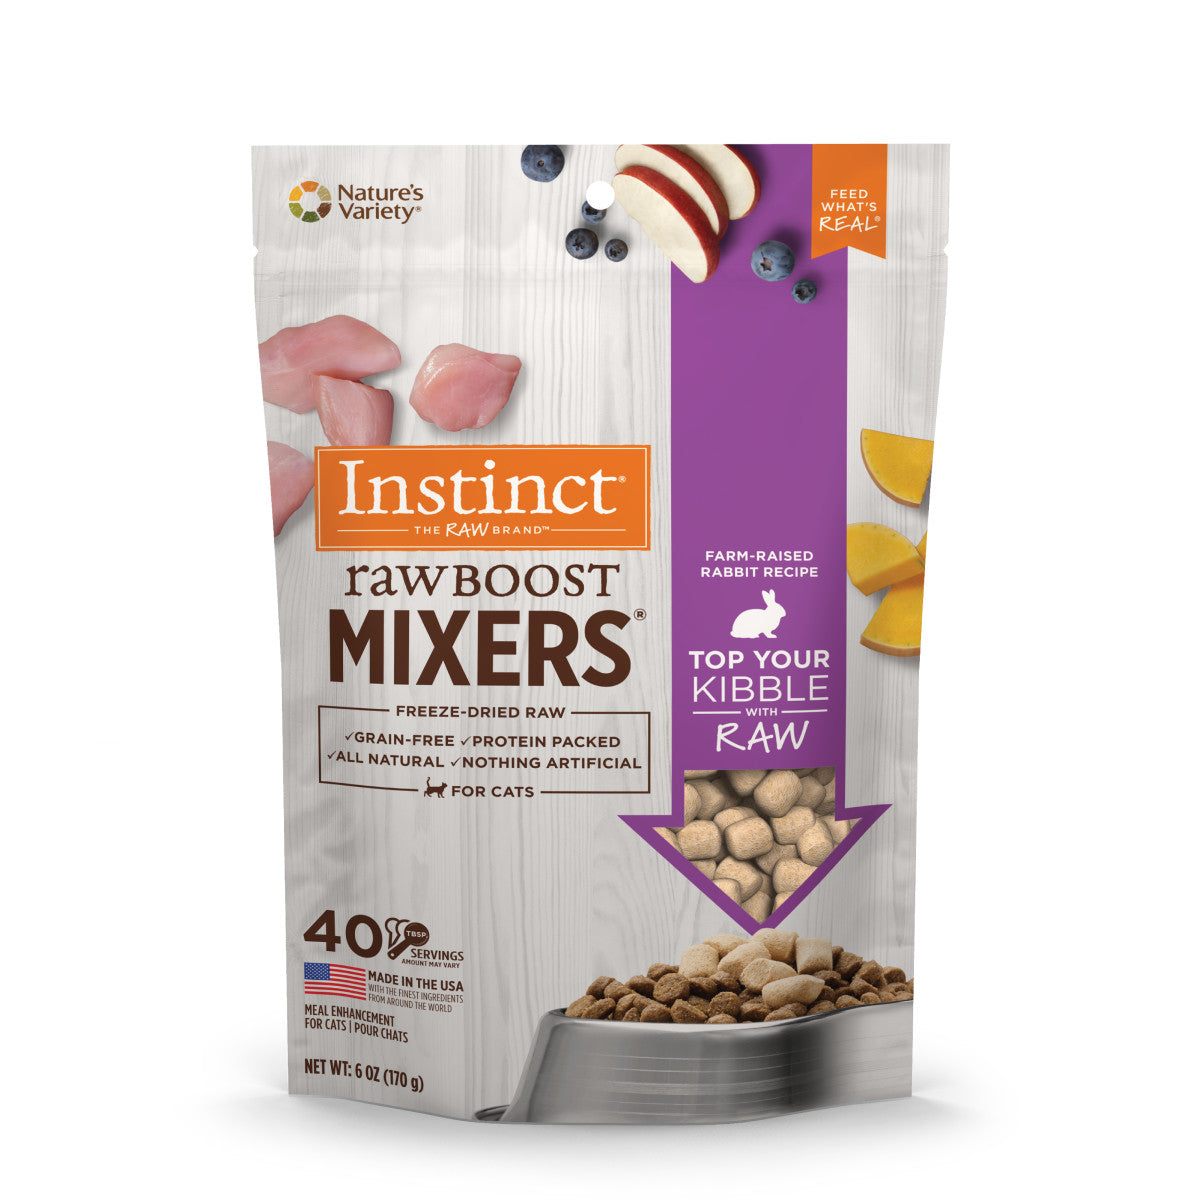 Instinct - Raw Boost Mixers Farm-Raised Rabbit Recipe